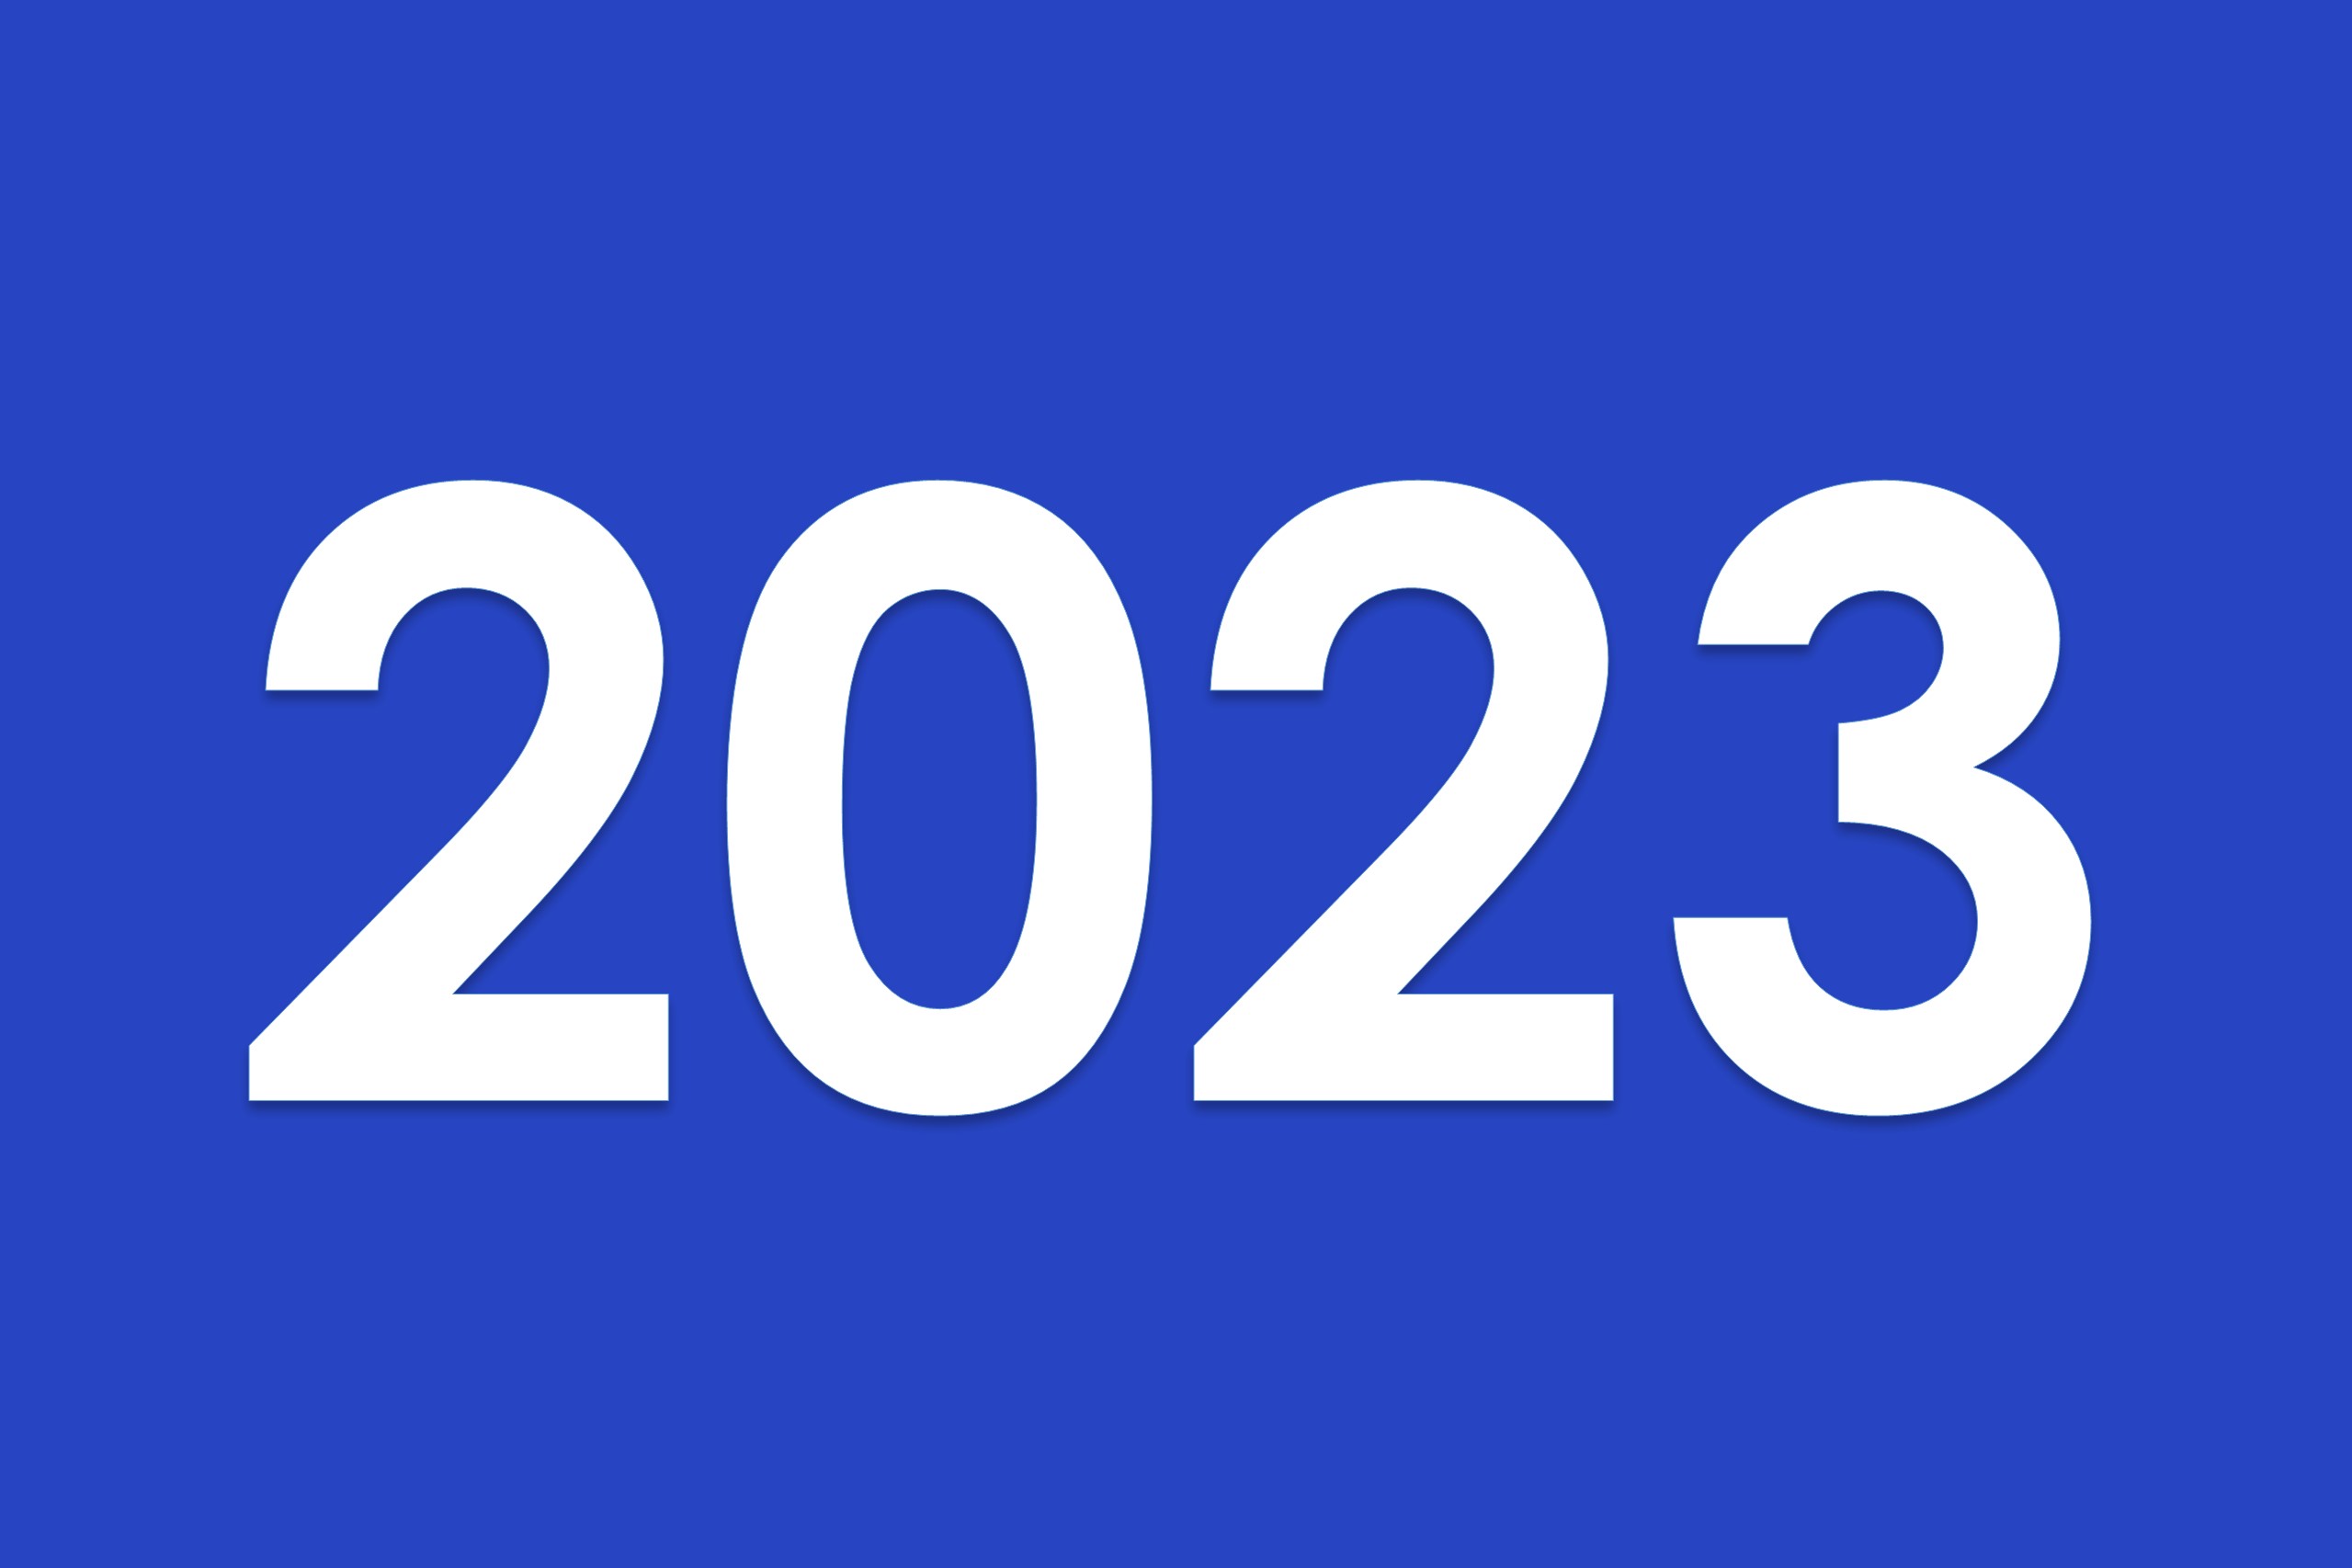 Annual General Meeting 2023